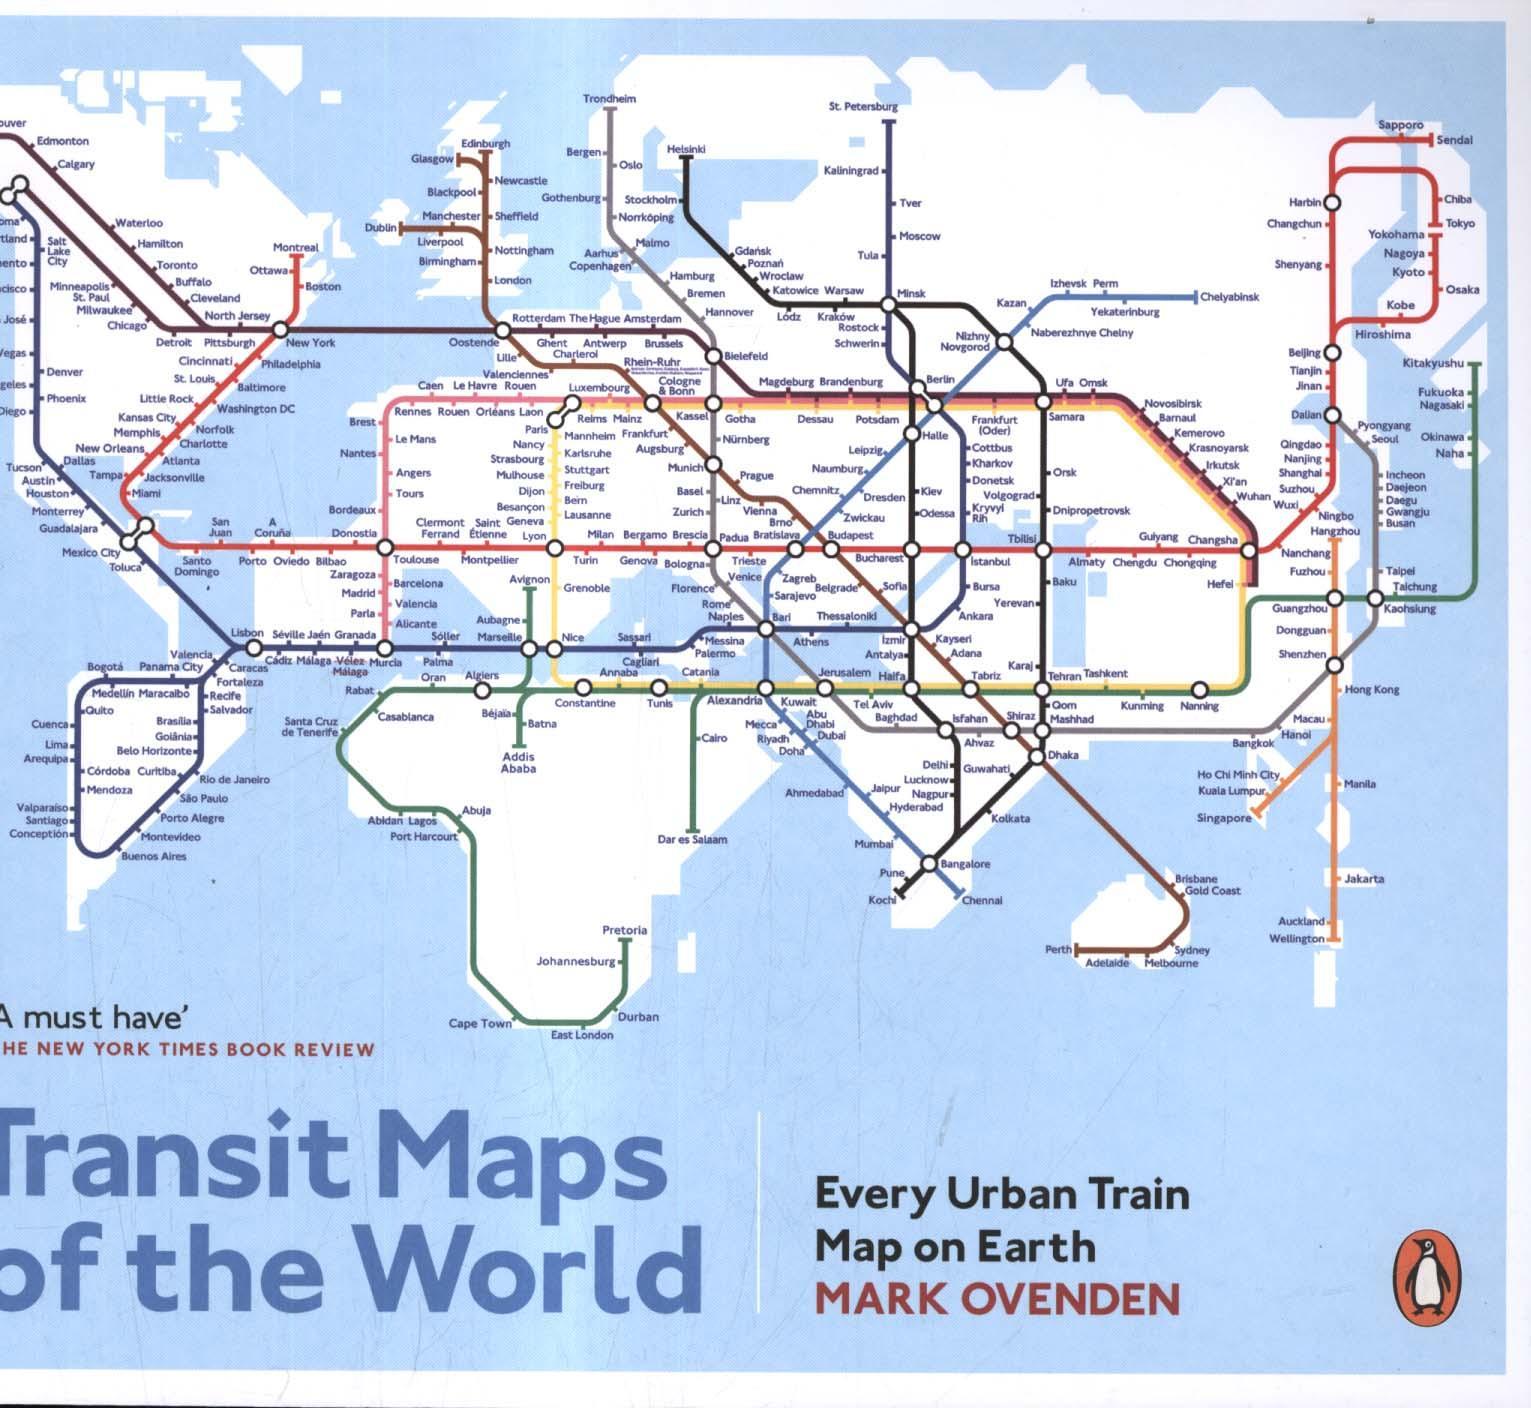 Transit Maps of the World - Mark Ovenden